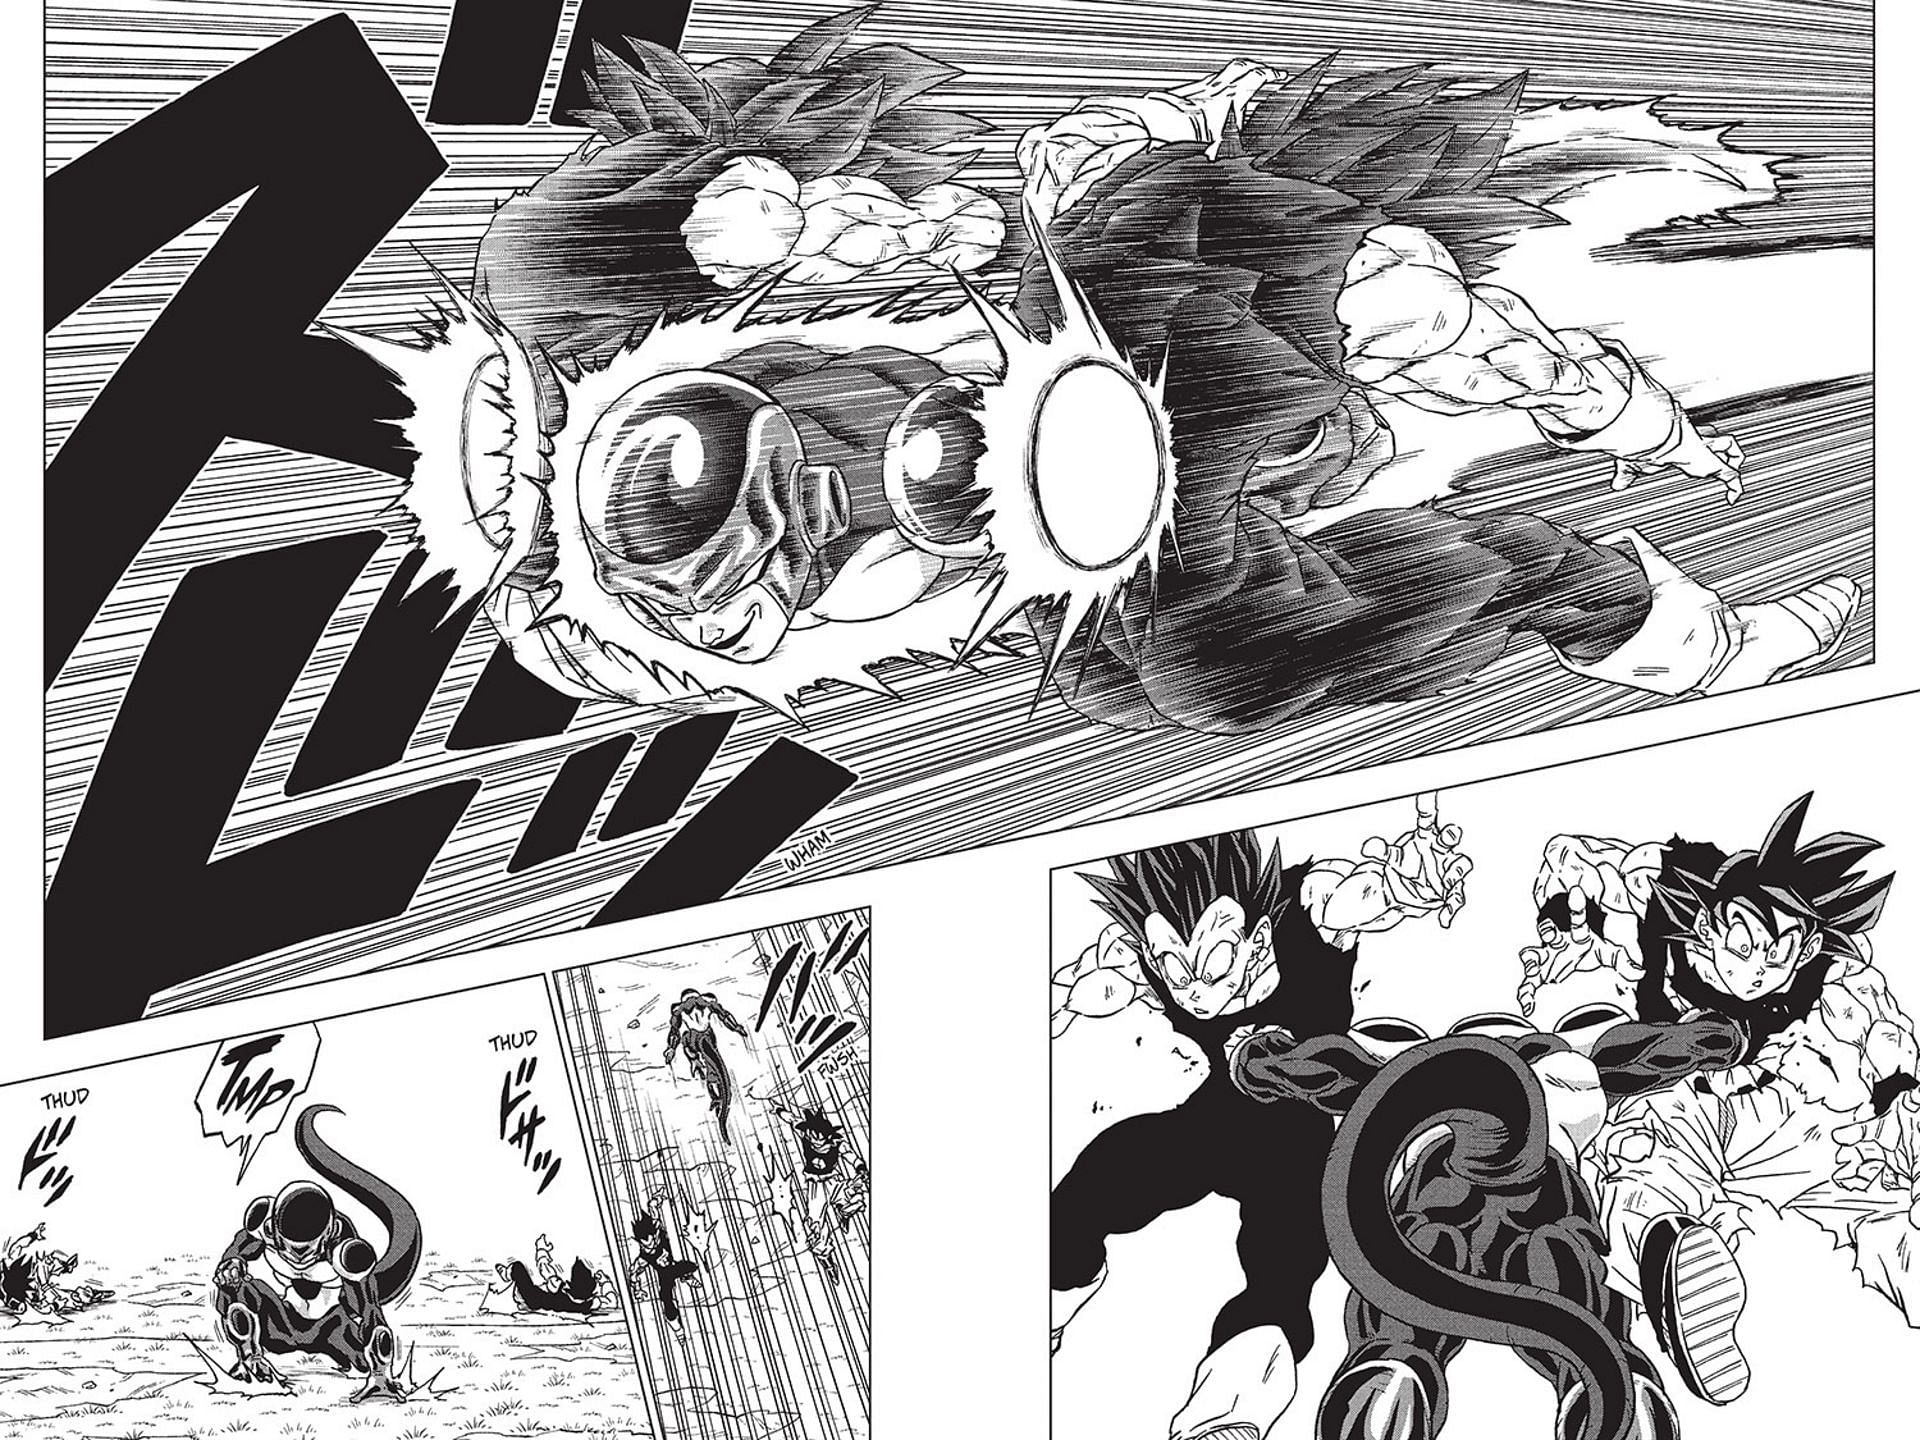 Black Frieza wipes the floor with Ultra Instinct and Ultra Ego (Image via Akira Toriyama, Shueisha)